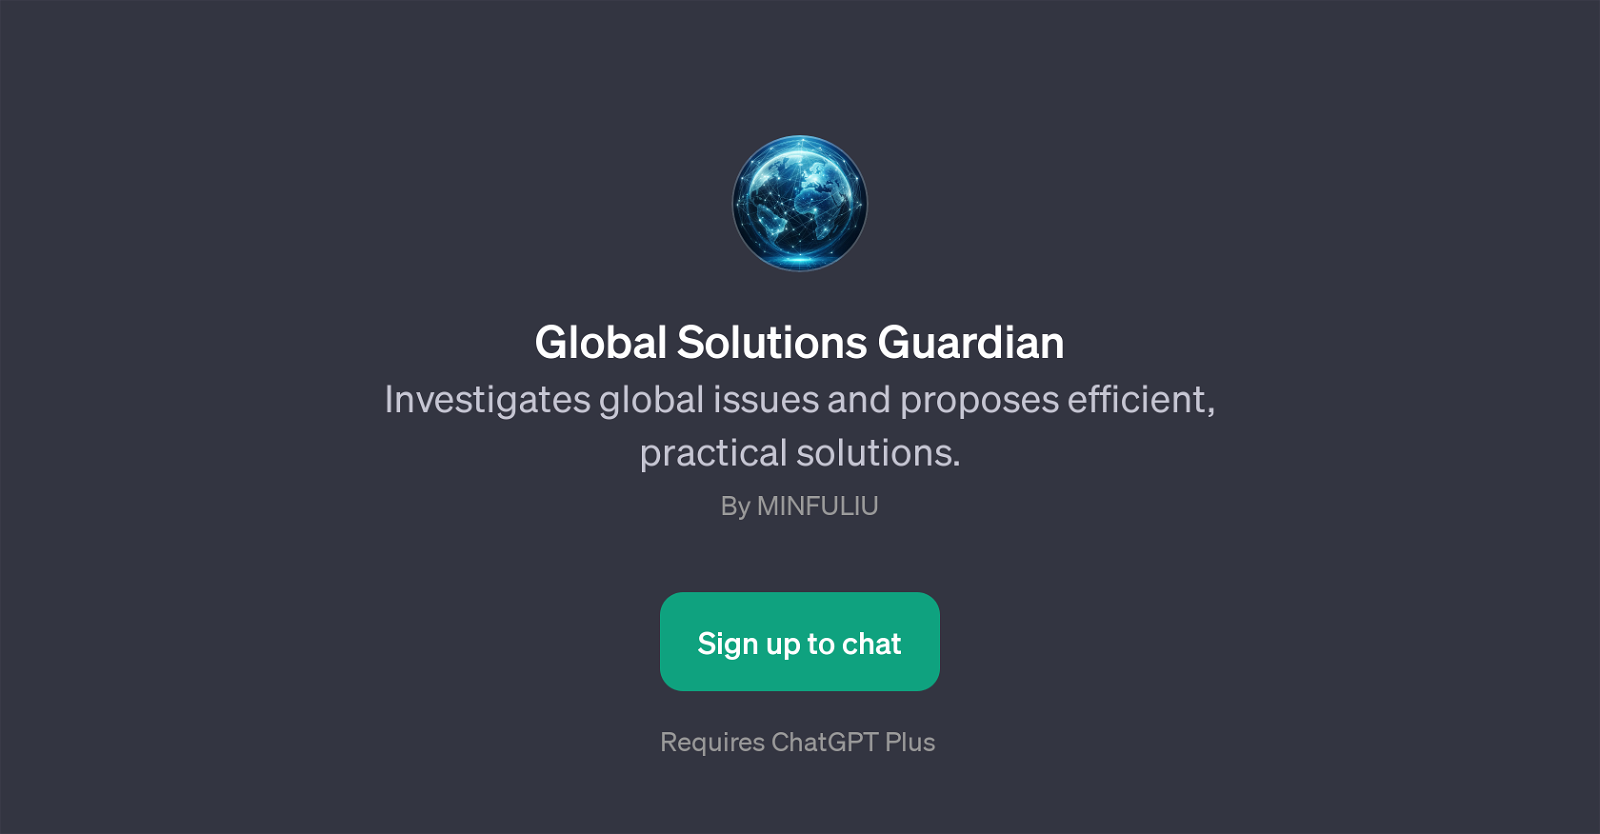 Global Solutions Guardian website